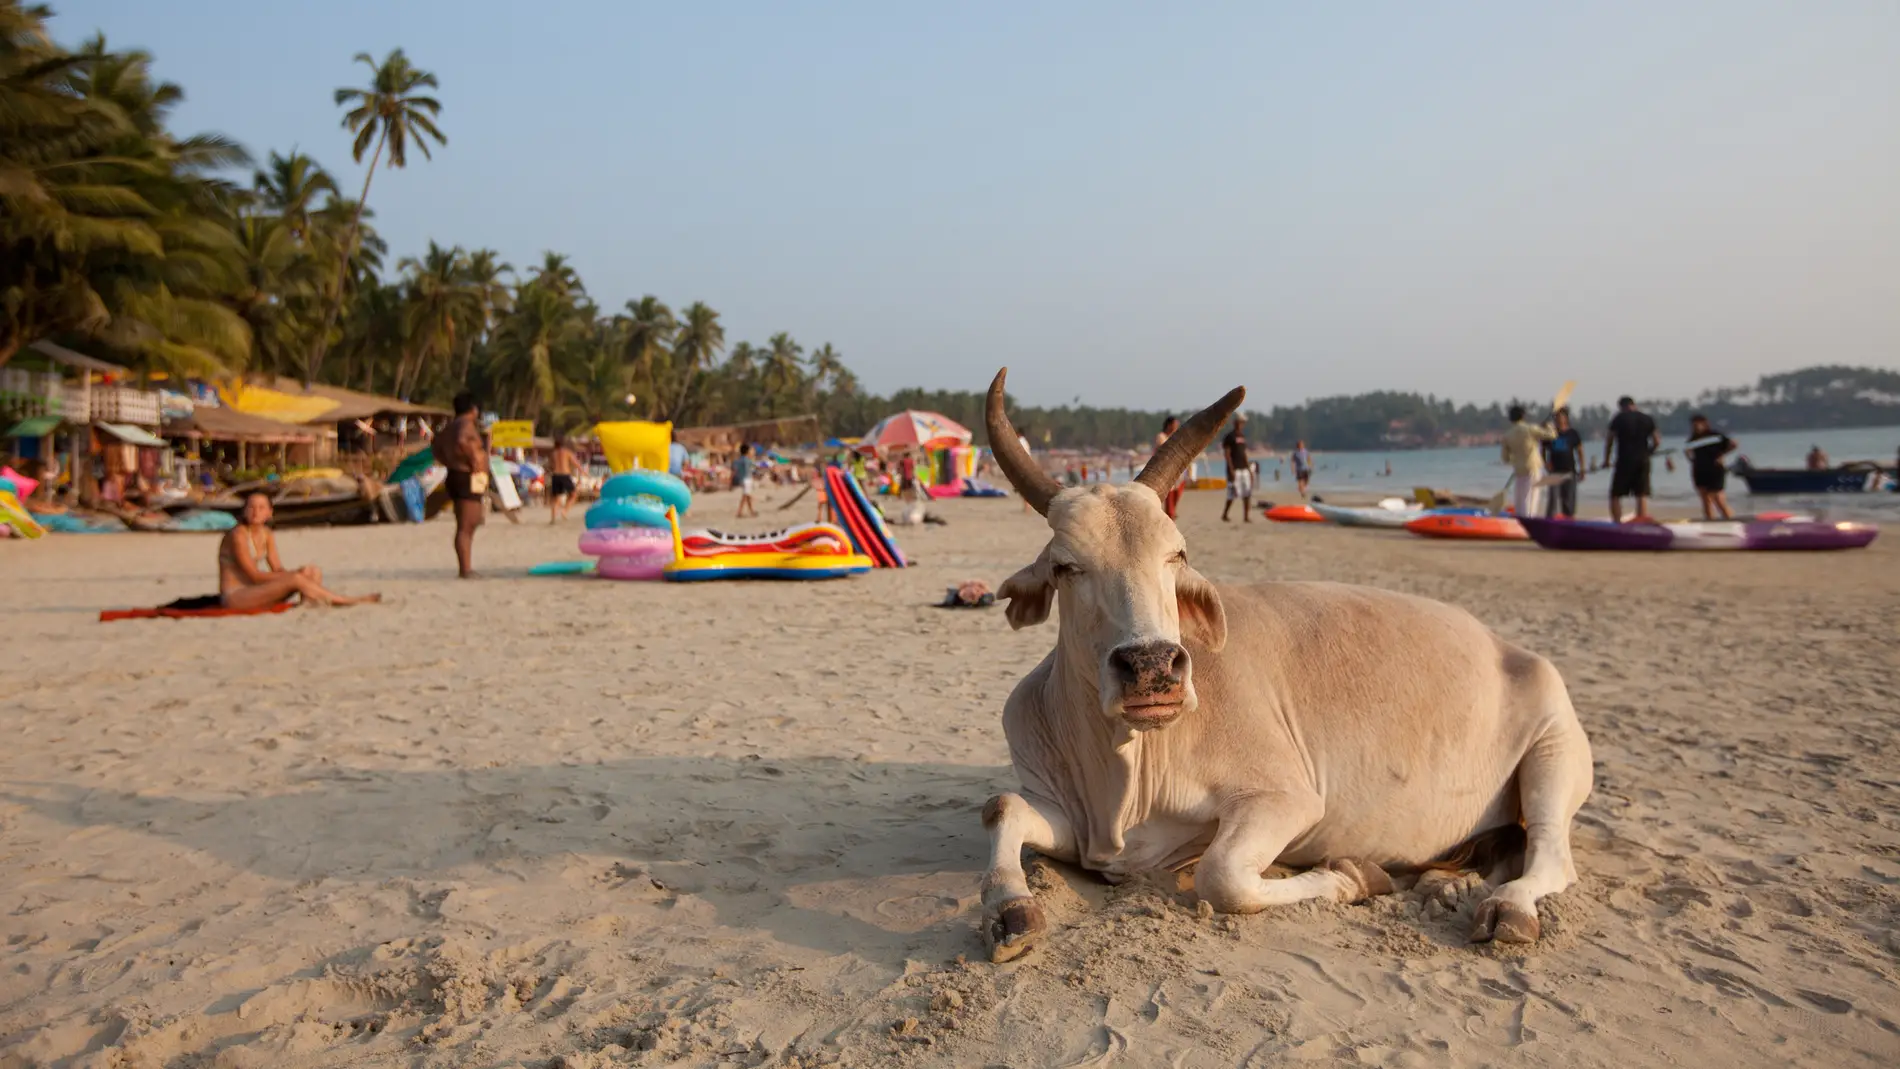 No, la playa no es el hábitat natural de las vacas.